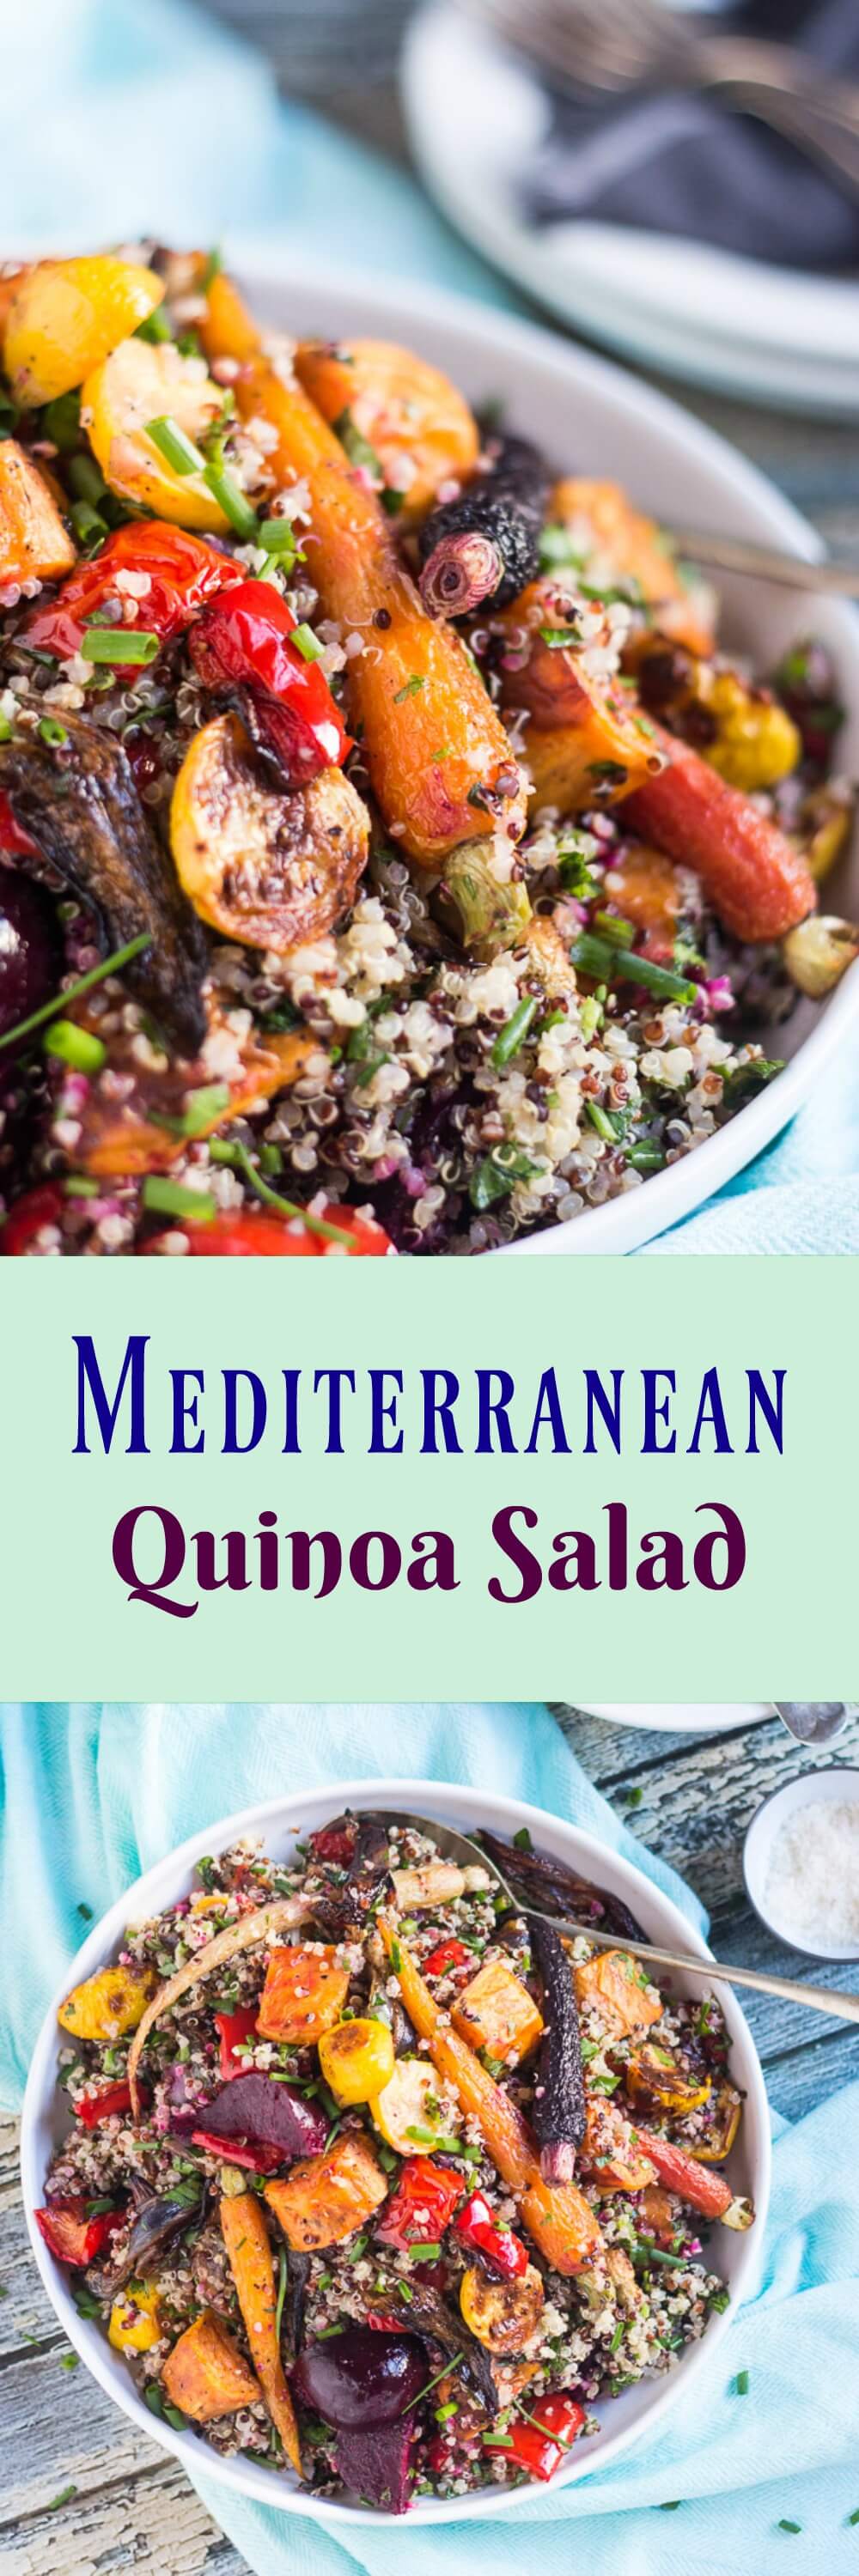 Mediterranean Quinoa Salad Recipe with Roasted Vegetables